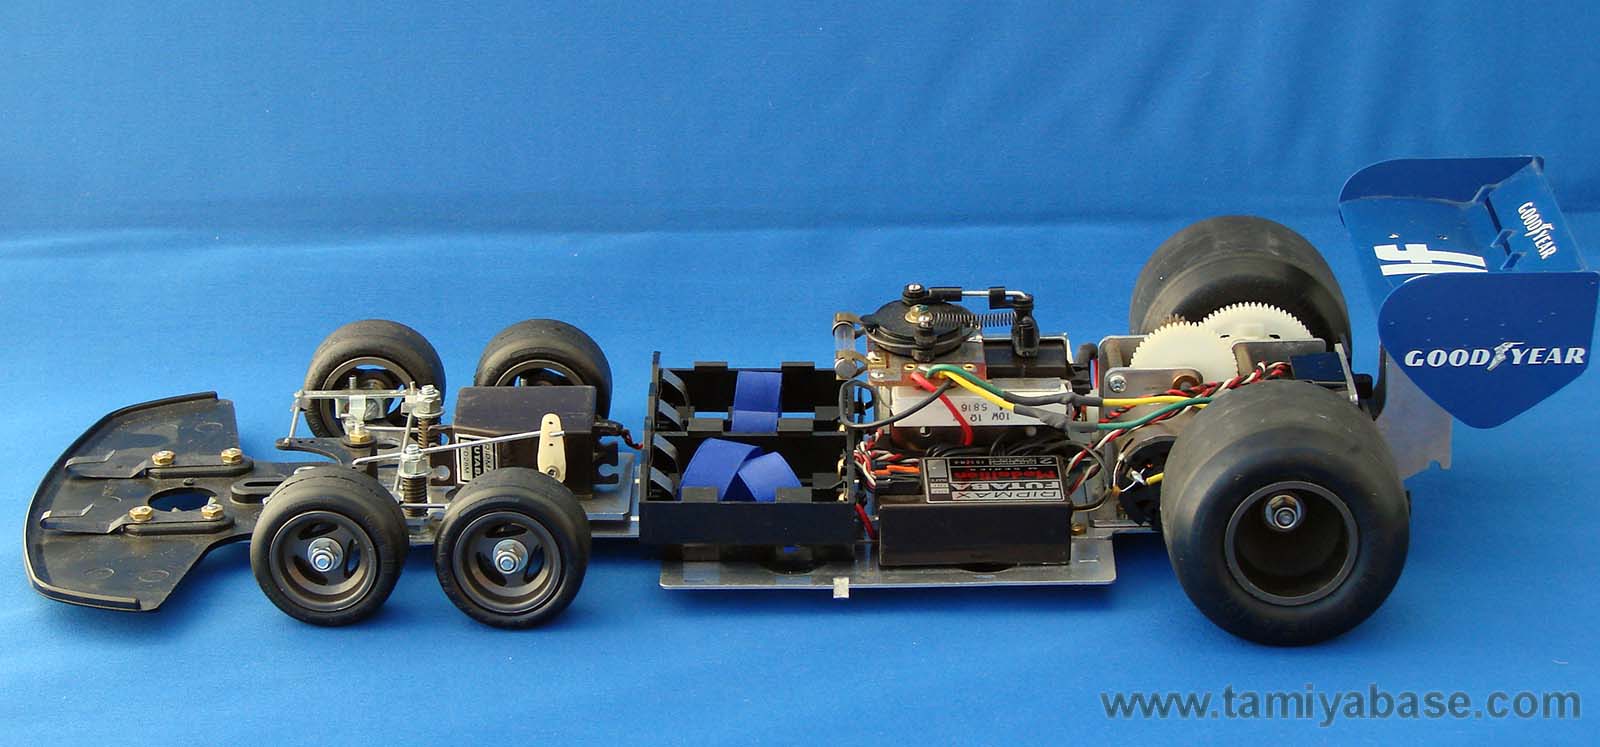 Rc Tyrrell P34 Six Wheeler